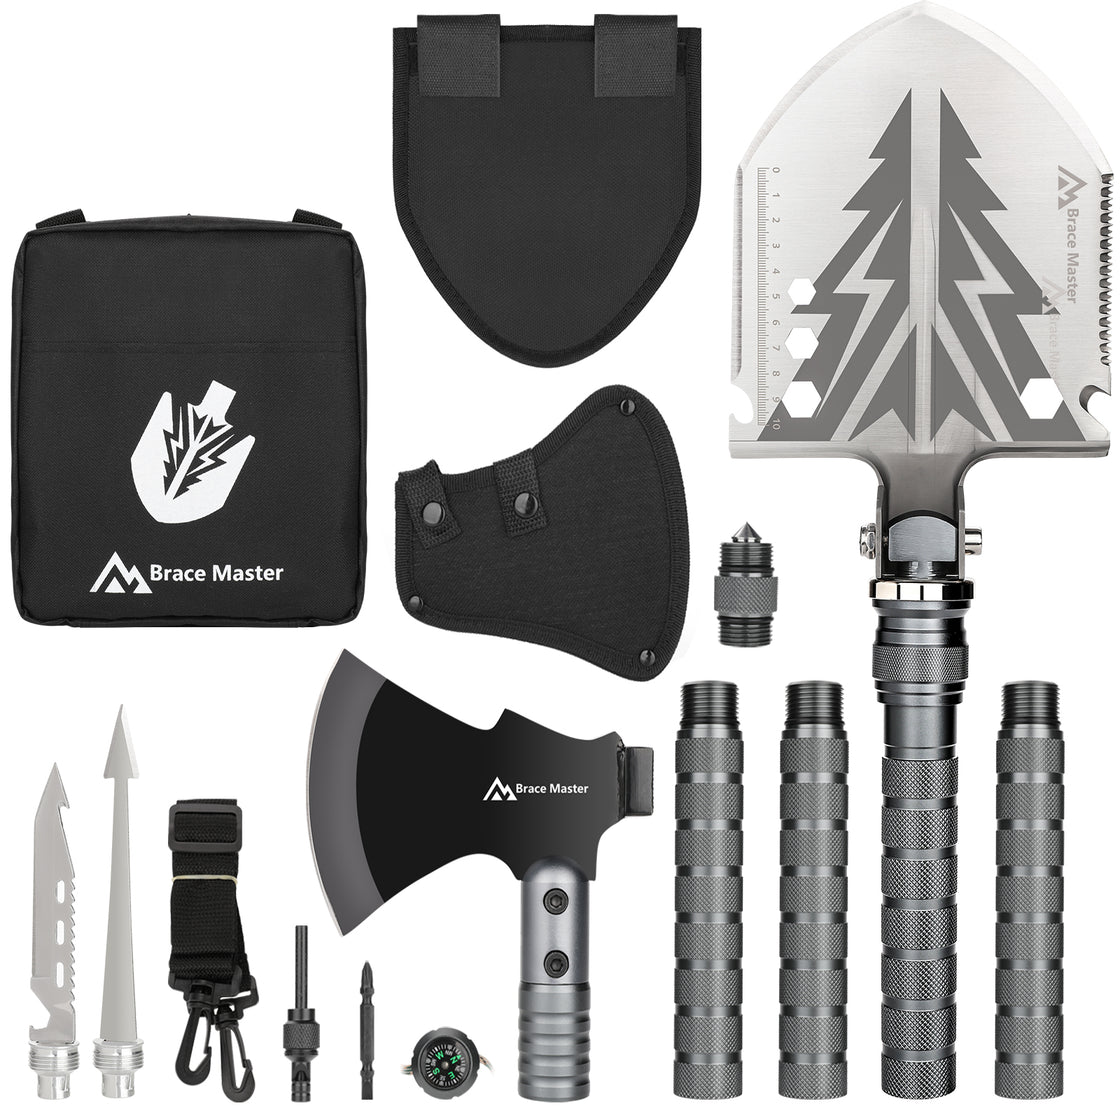 Brace Master Camping Shovel and Axe Set